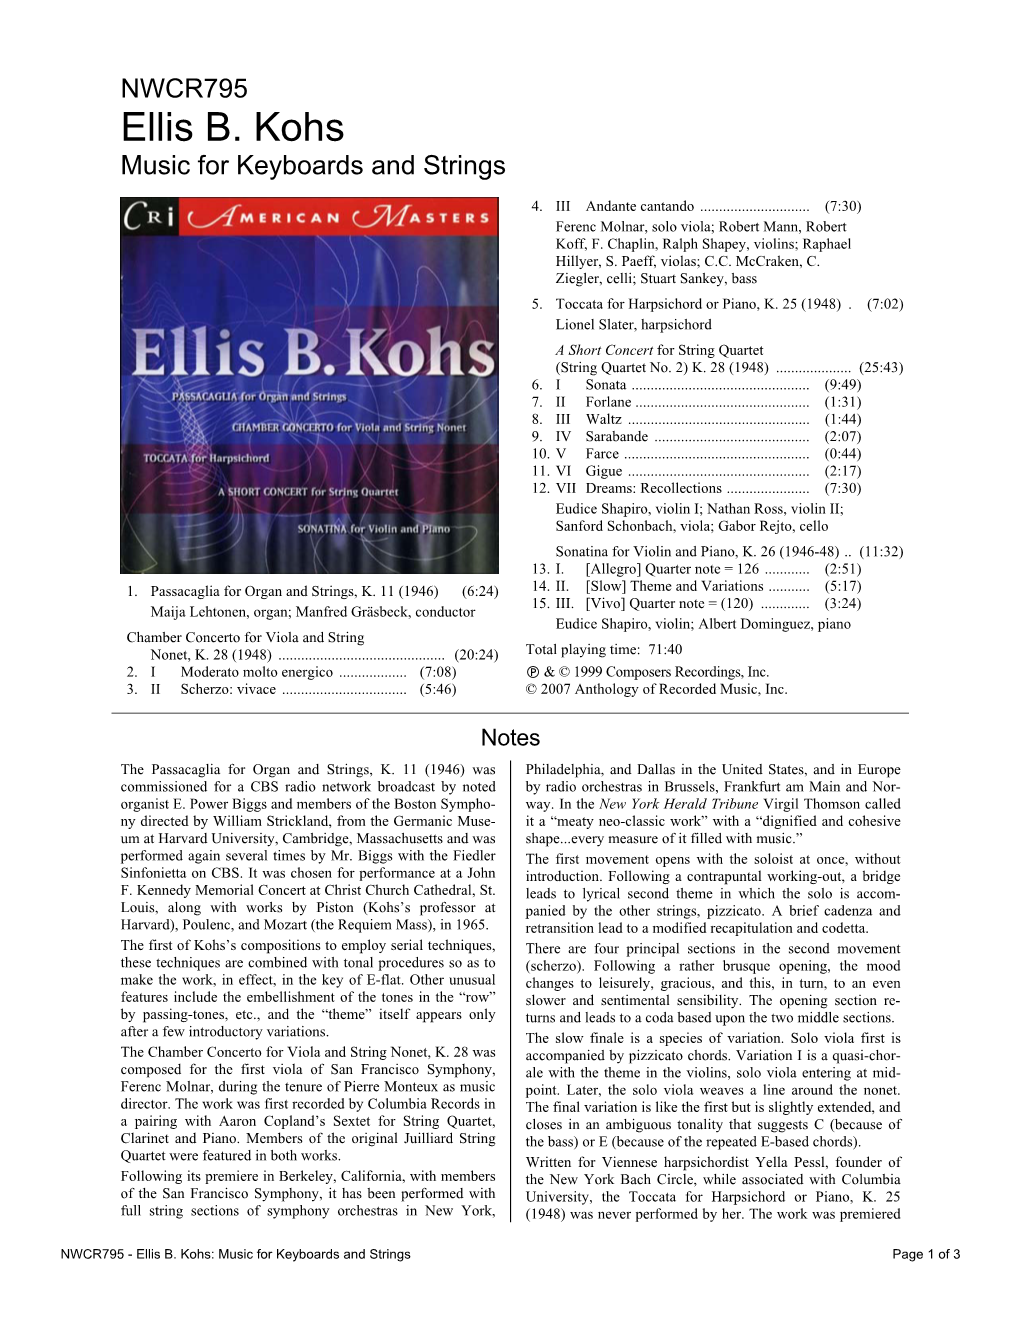 Ellis B. Kohs Music for Keyboards and Strings